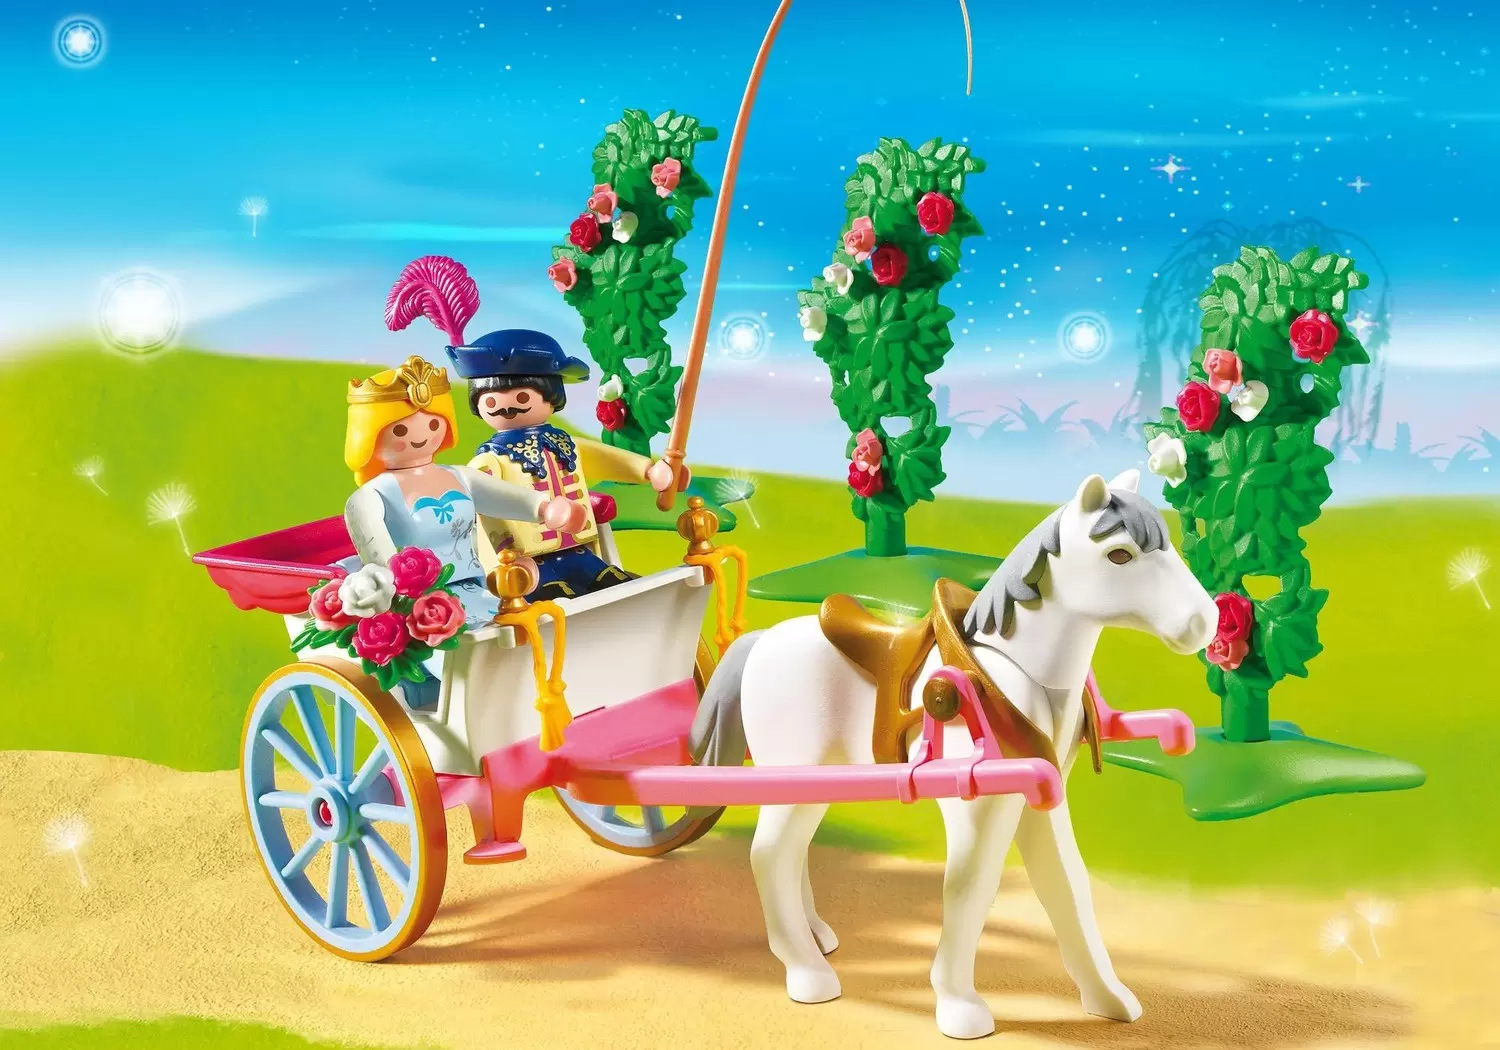 Cuisine royale - Playmobil Princesses 9875